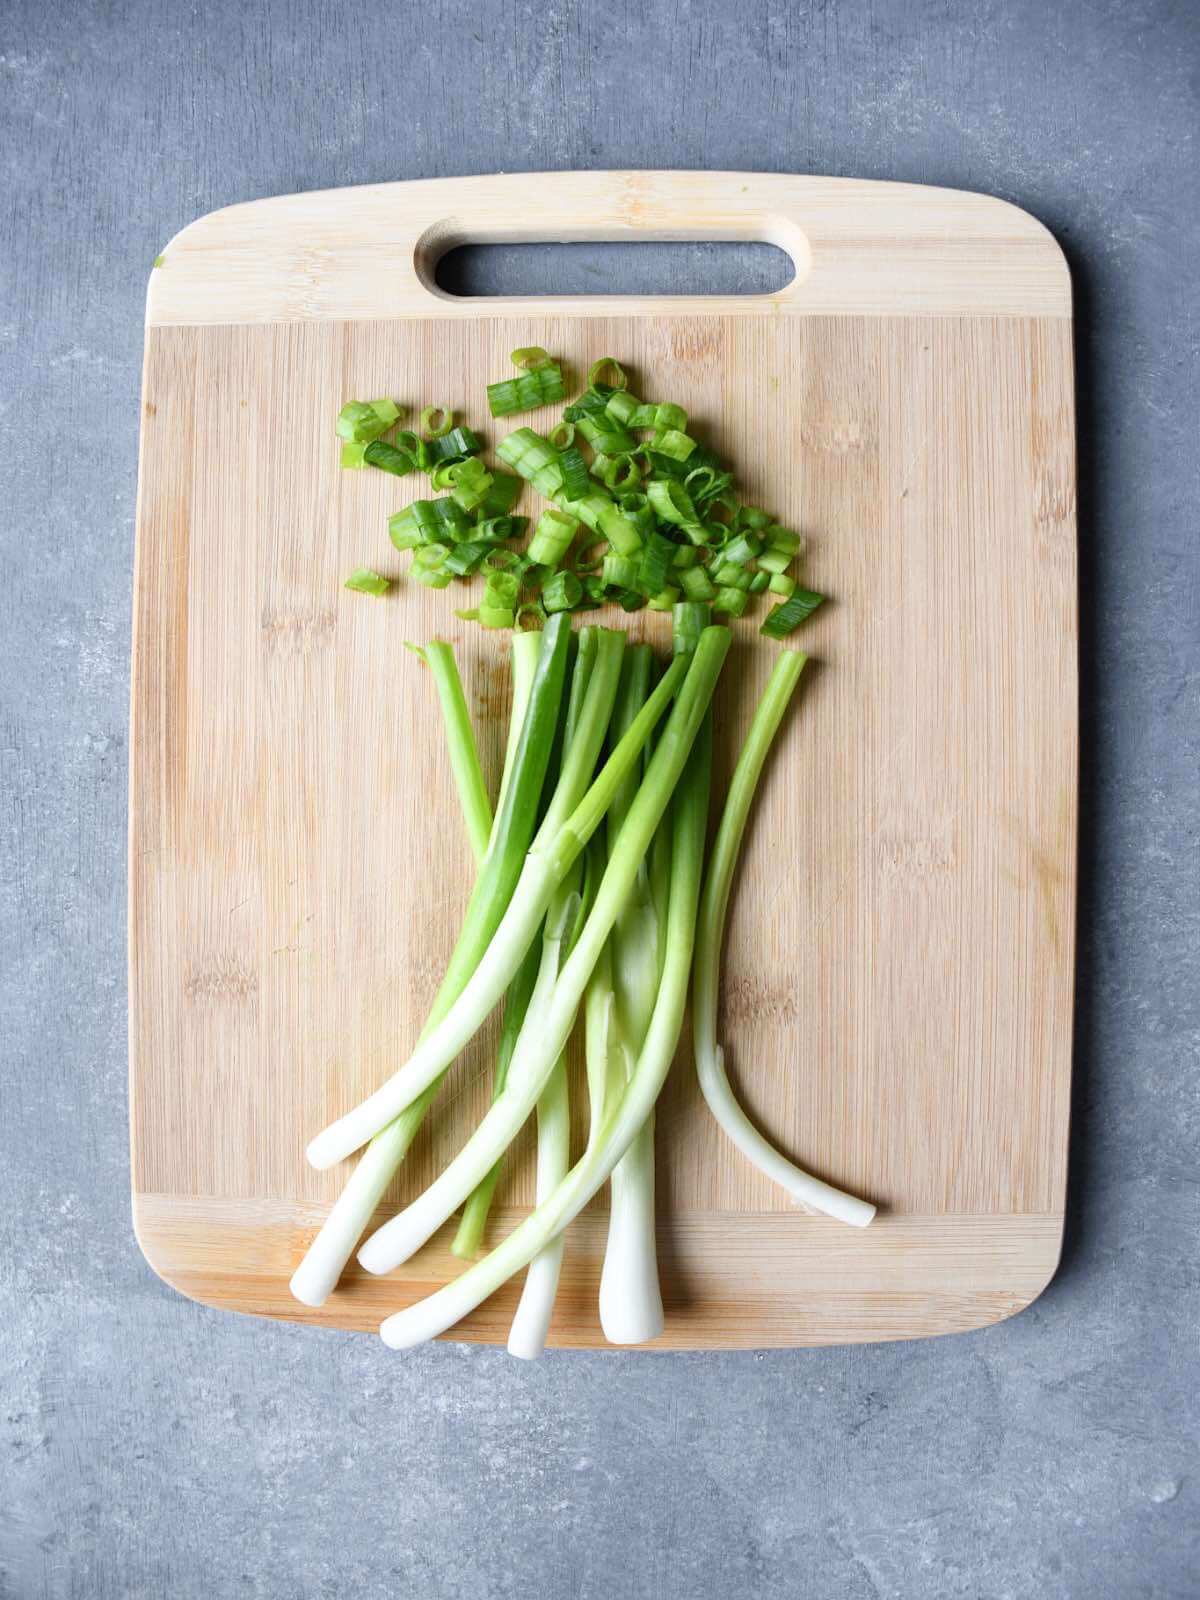 sliced green onions on a cutting board.